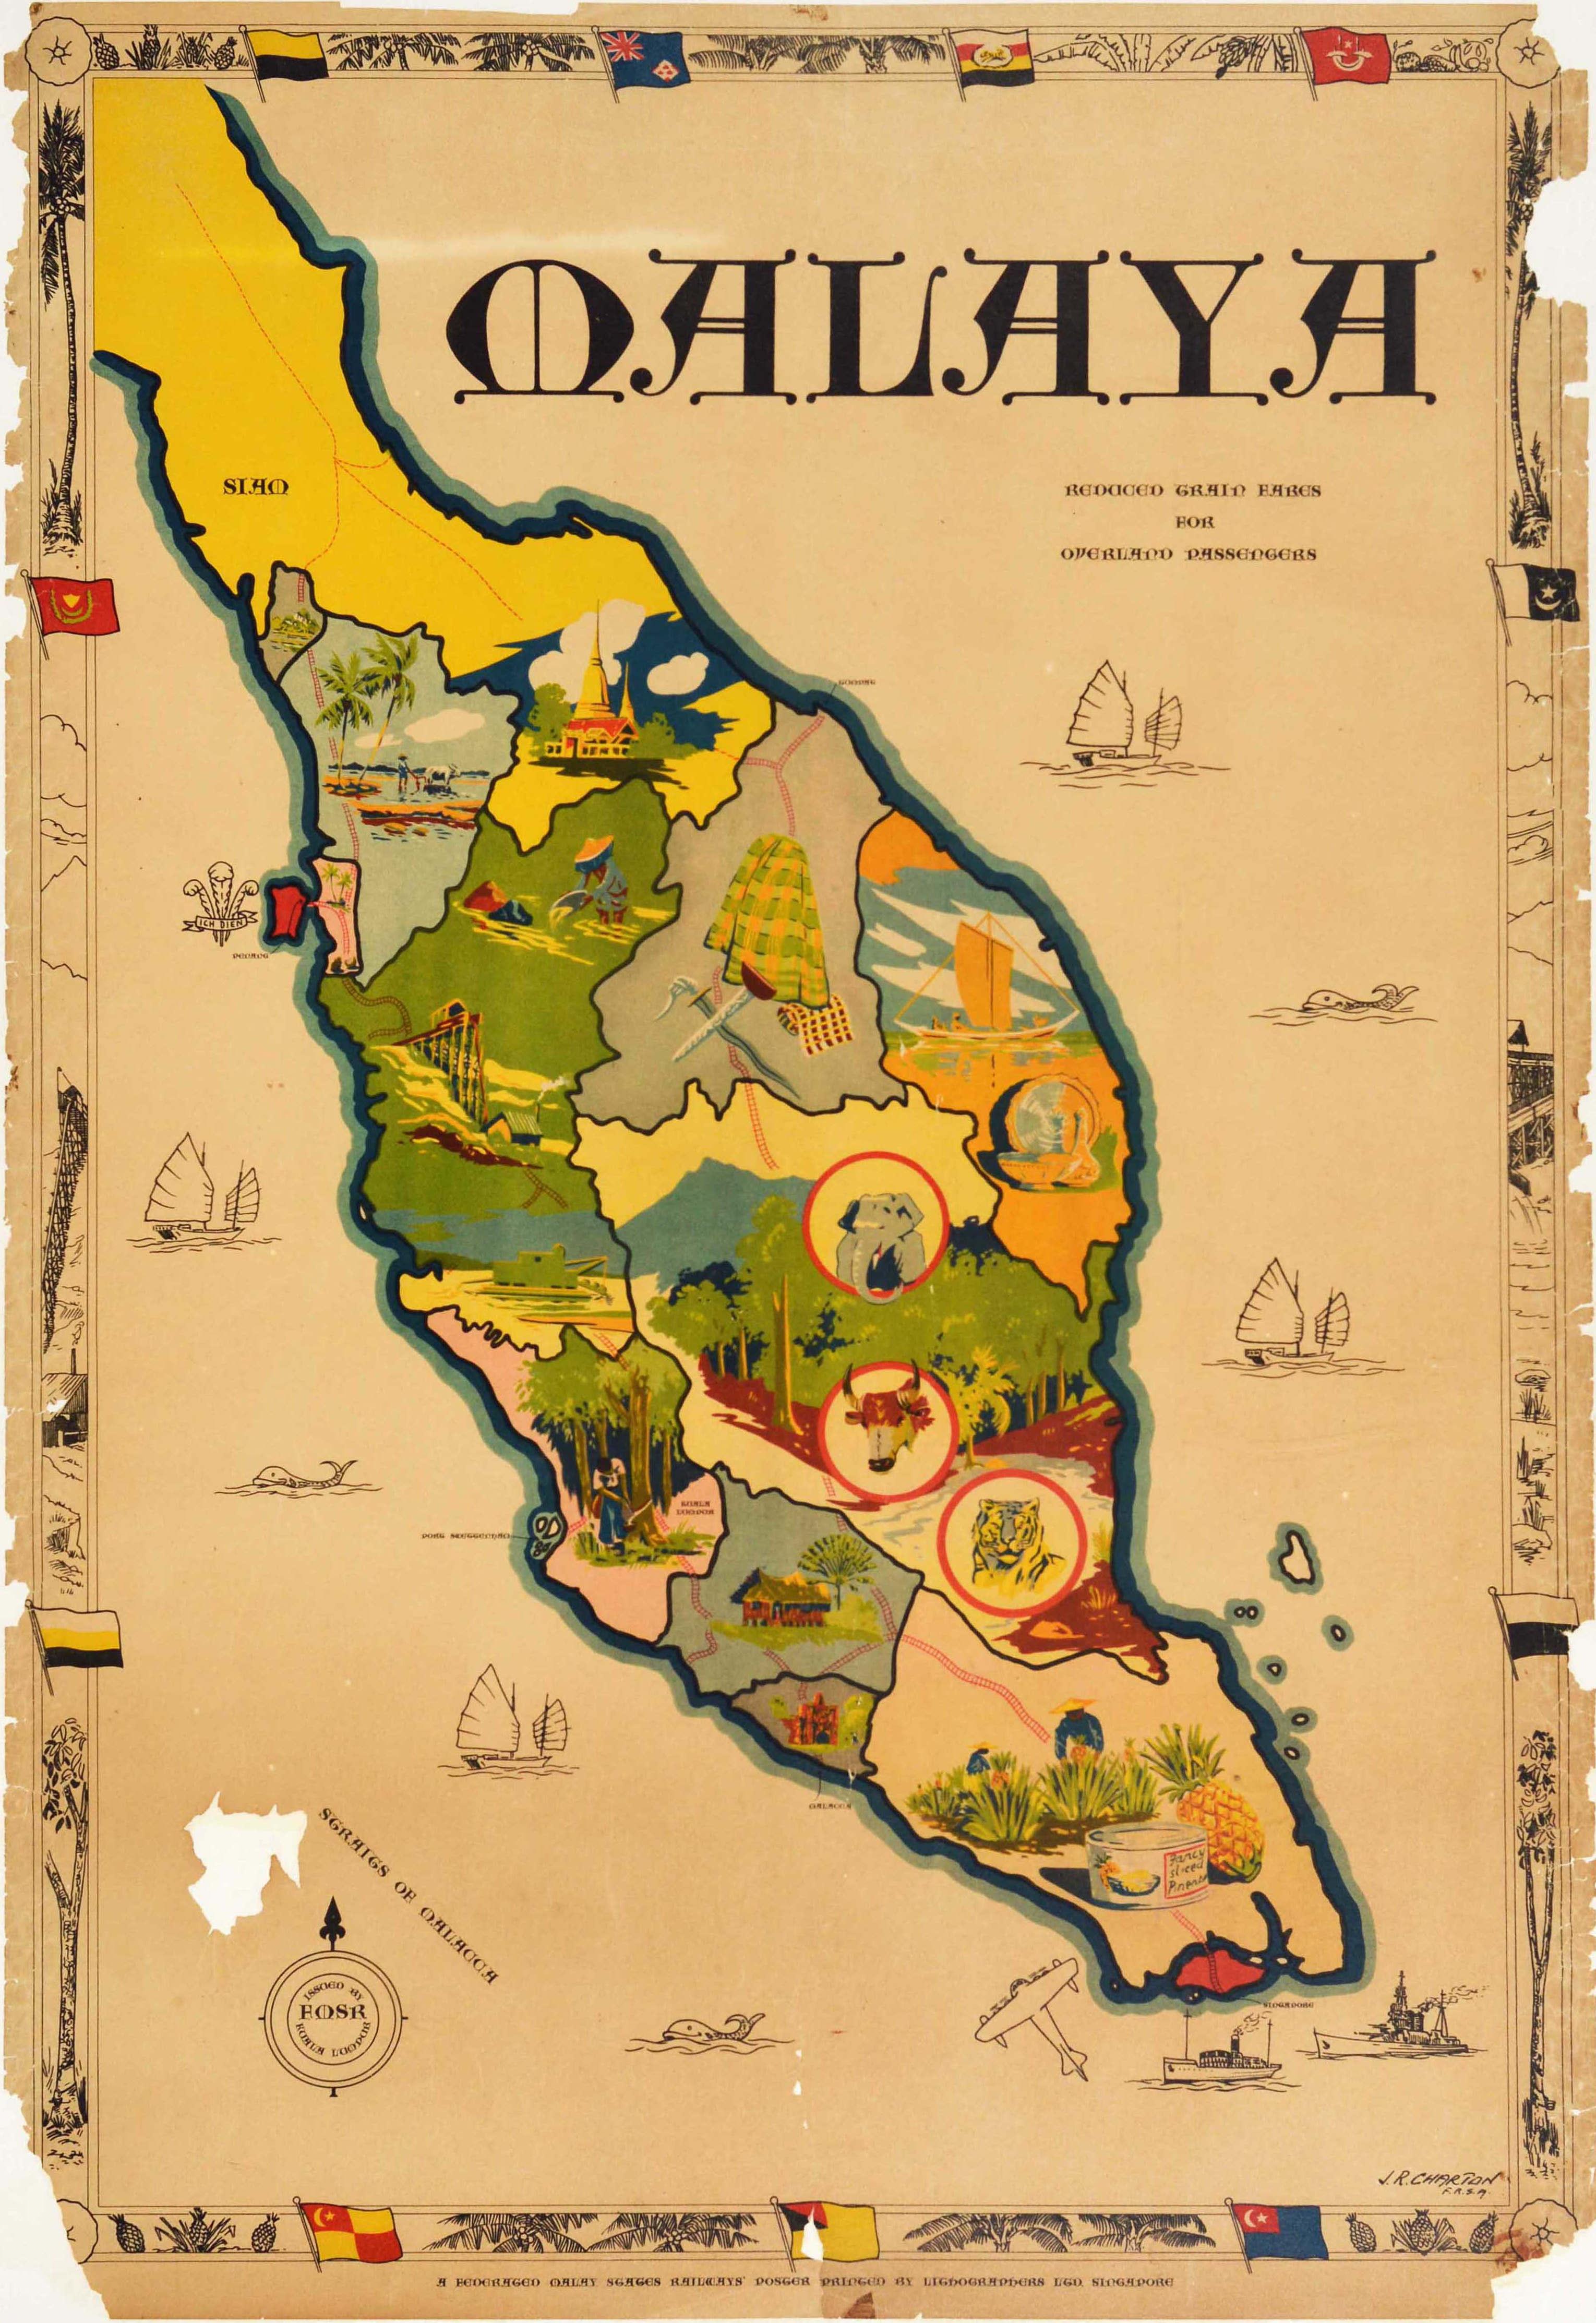 J.R. Charton Print - Original Vintage Map Poster Malaya Federated Malay States Railways Asia Travel